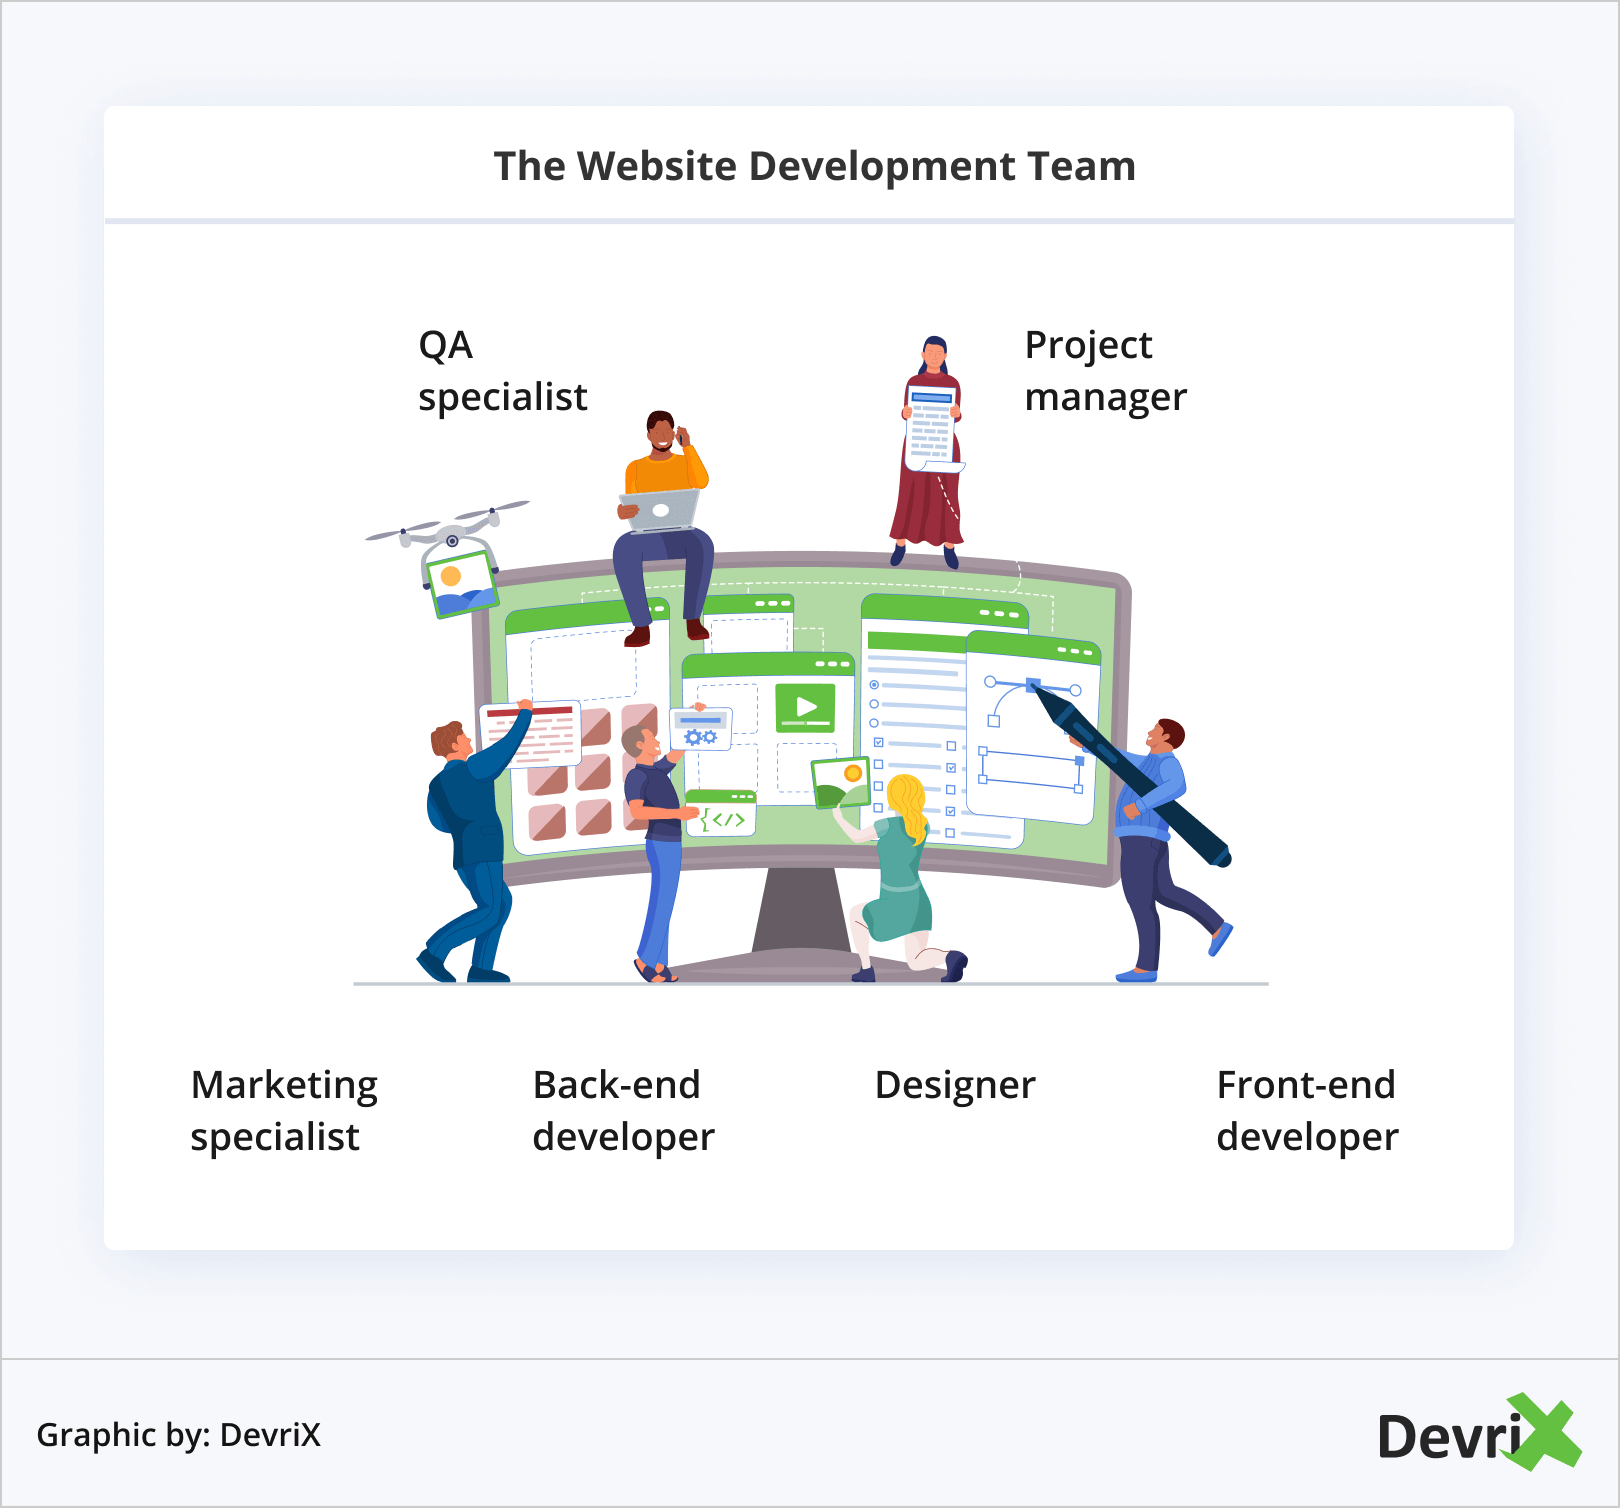 The Website Development Team